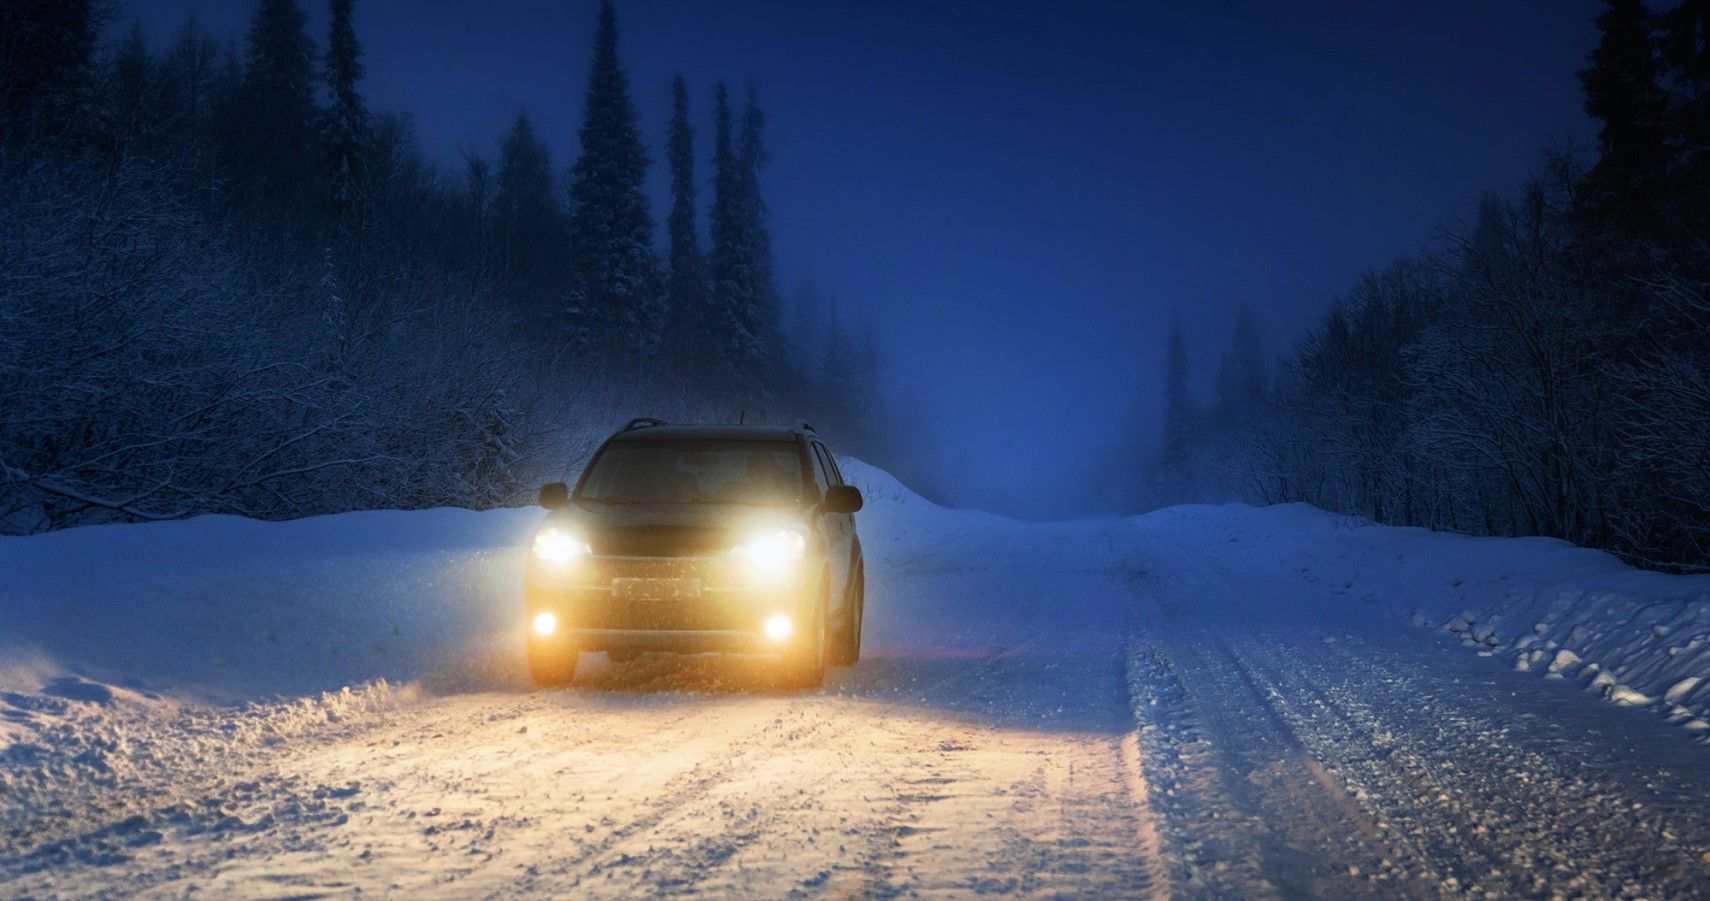 Night drive in snow hd wallpaper